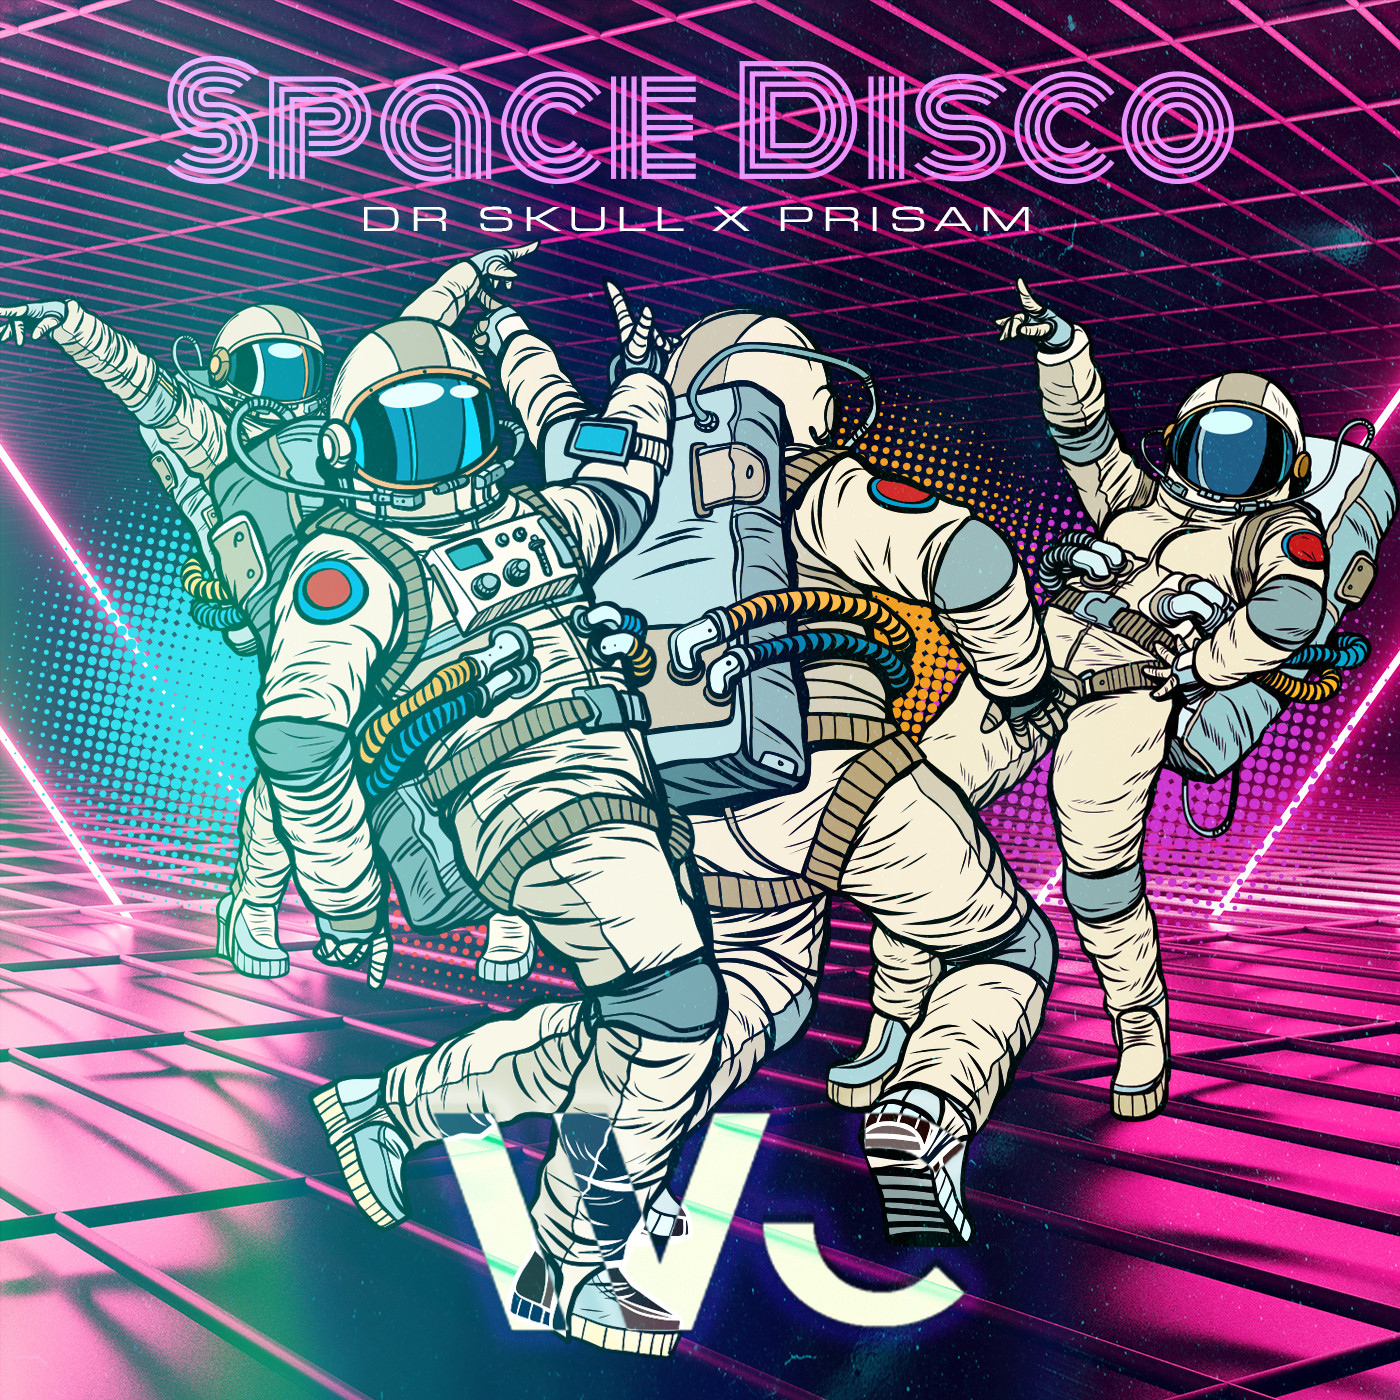 Space disco 6 ebony